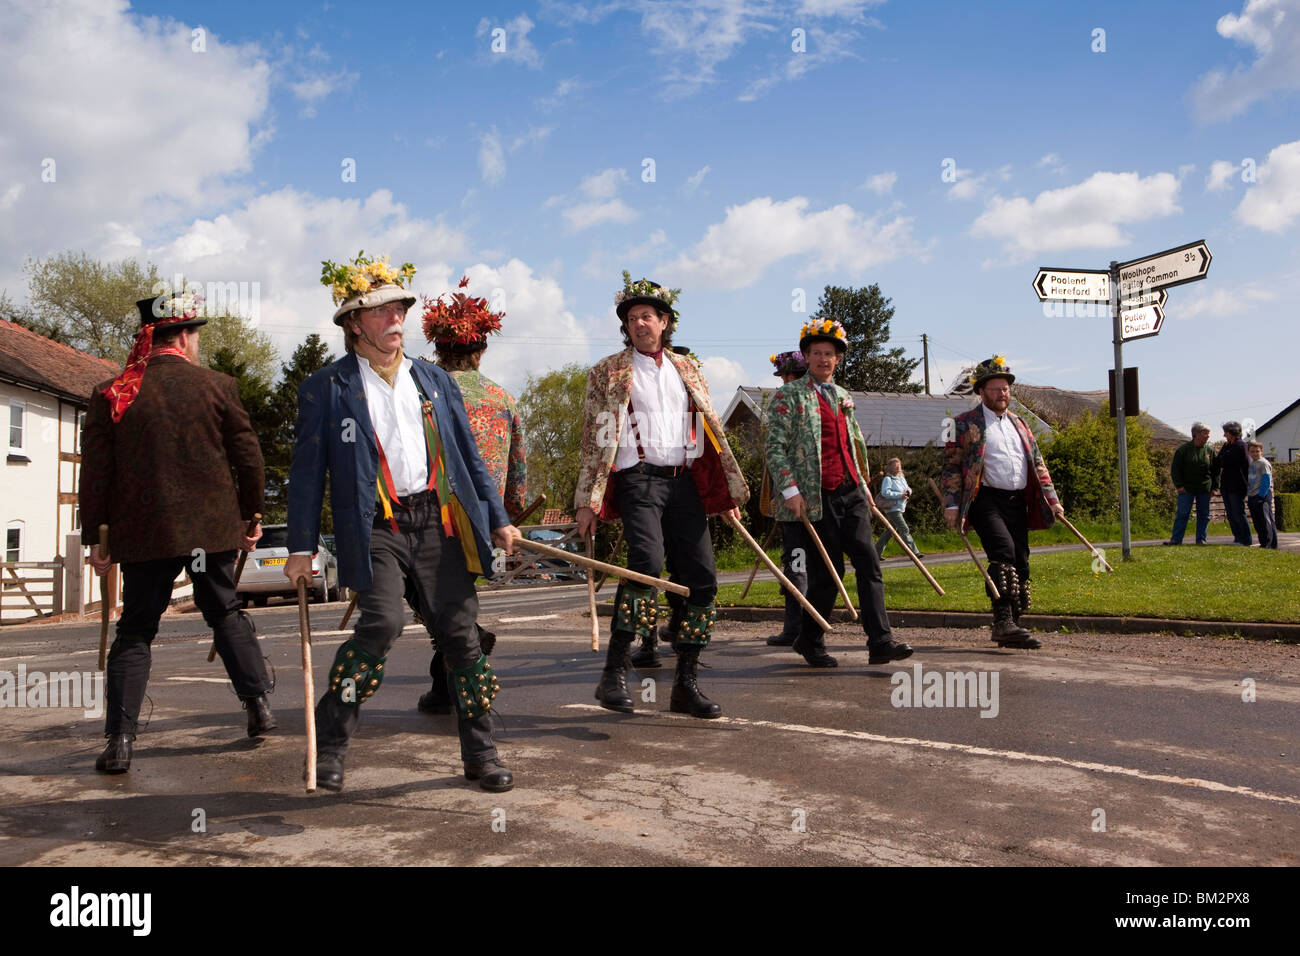 UK, England, Herefordshire, Putley, Big Apple Event, Morris men dancing with sticks on village green in sunshine Stock Photo